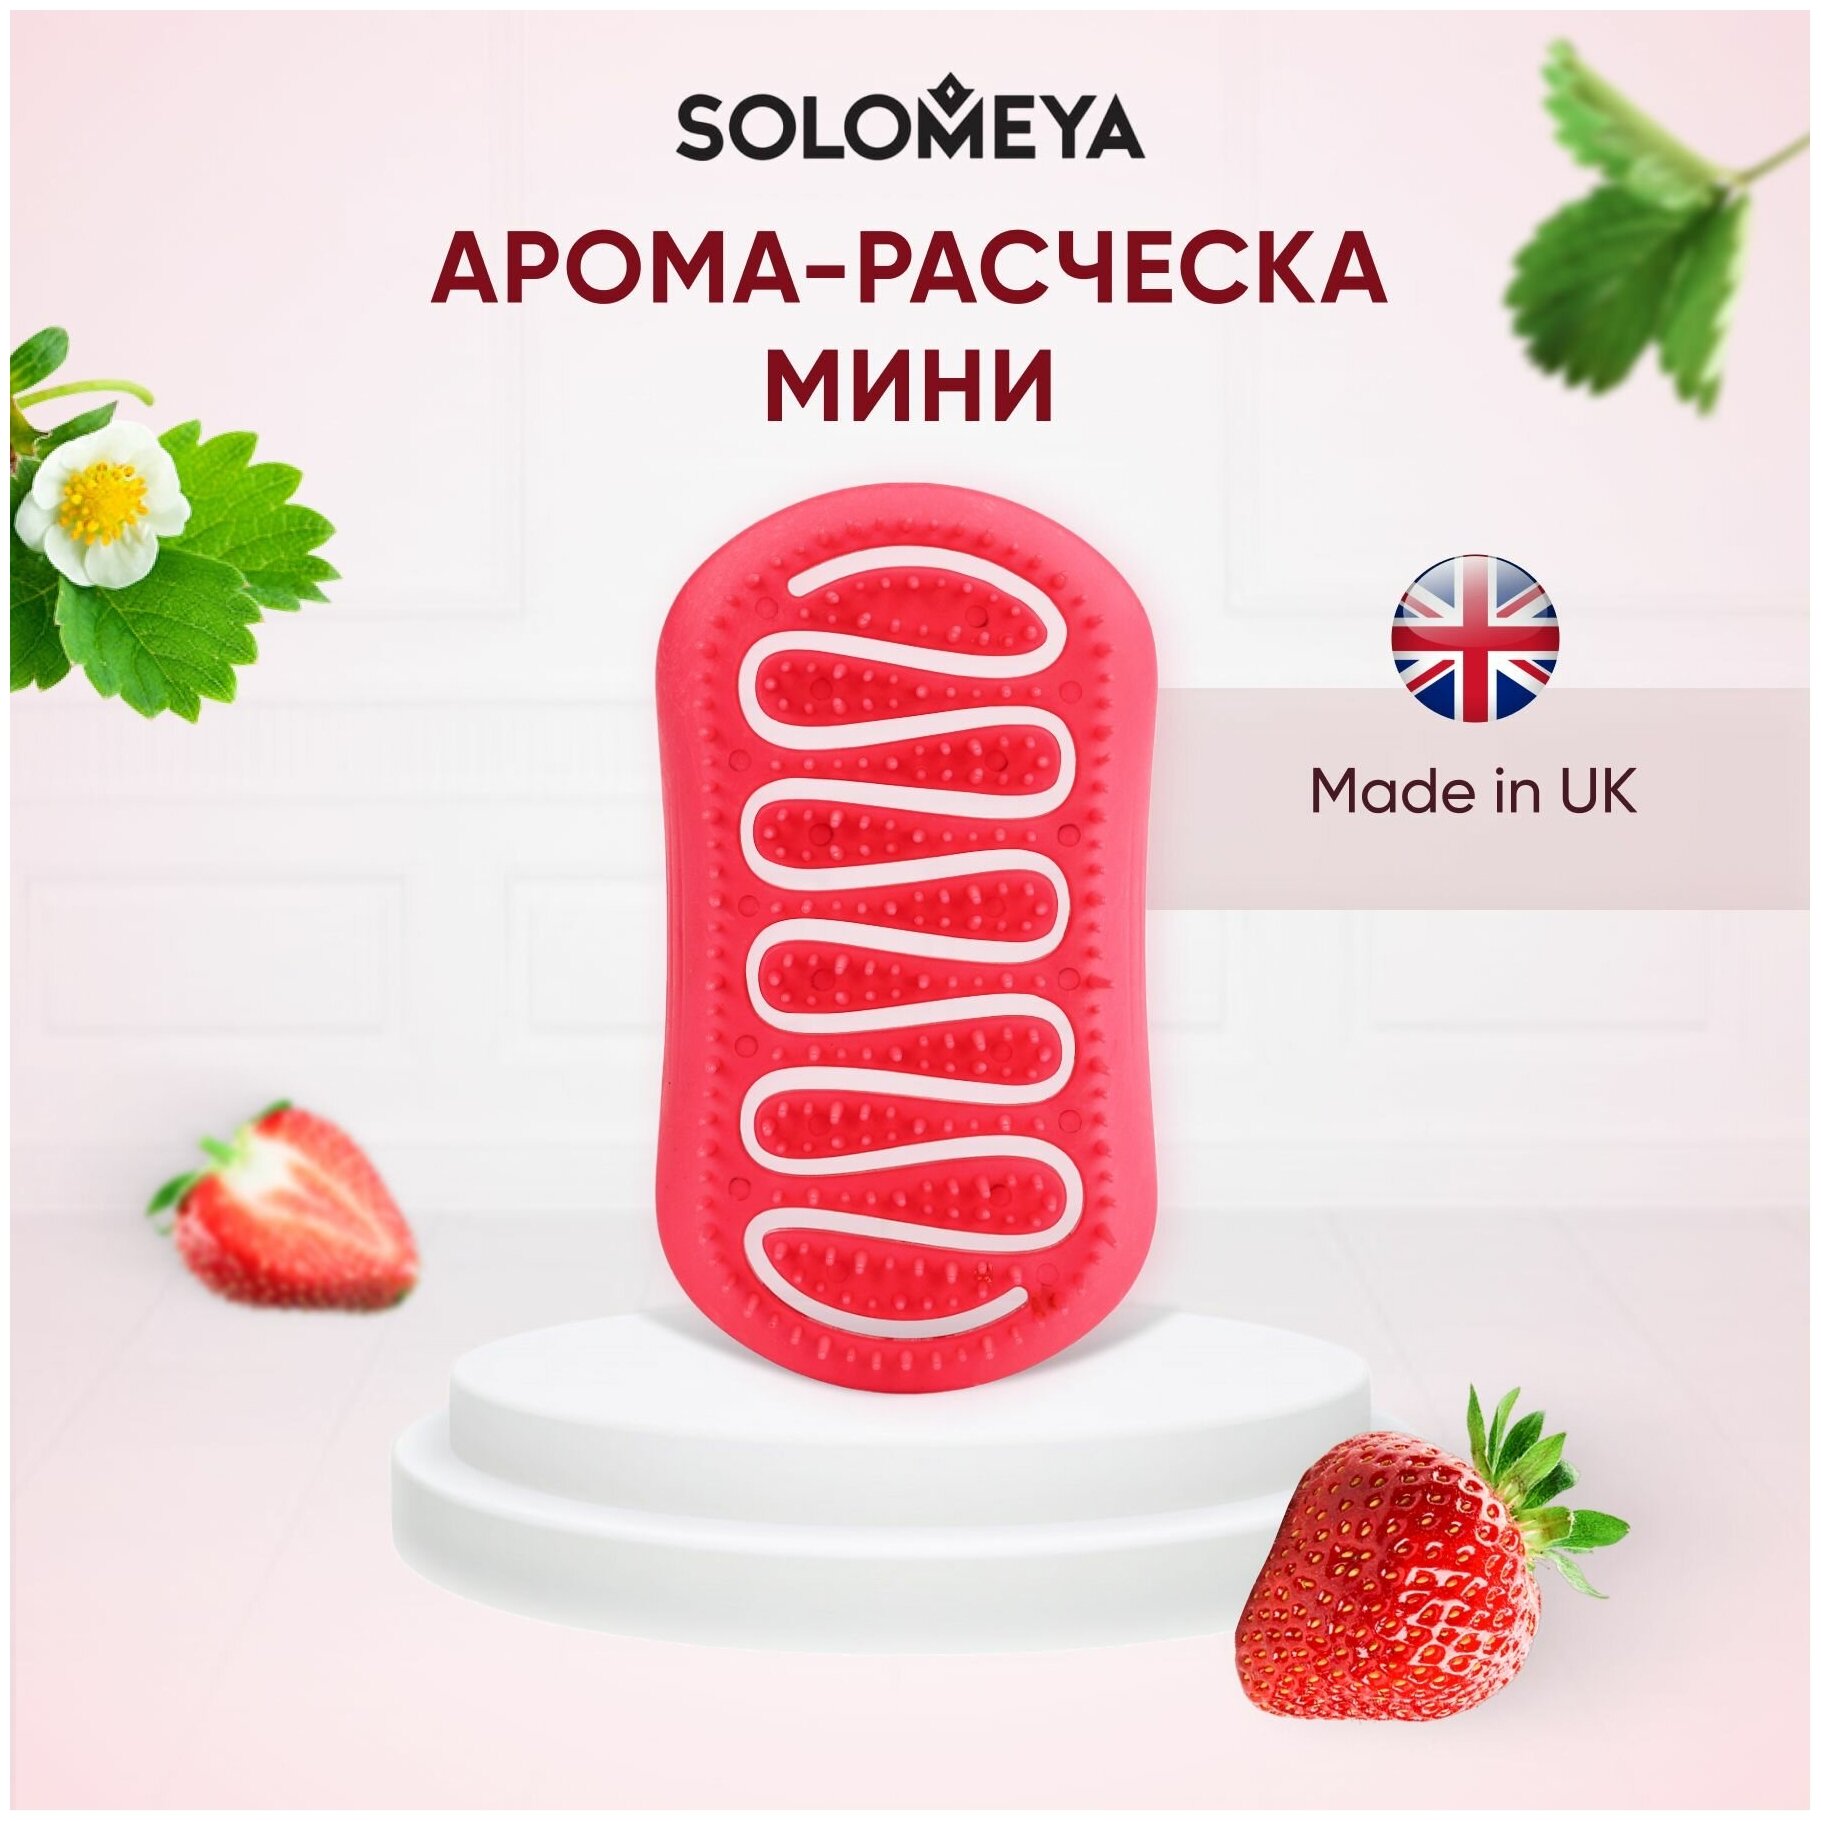 Solomeya Арома-расческа для сухих и влажных волос с ароматом Клубники мини / Aroma Brush for Wet&Dry hair Strawberry mini, 1 шт